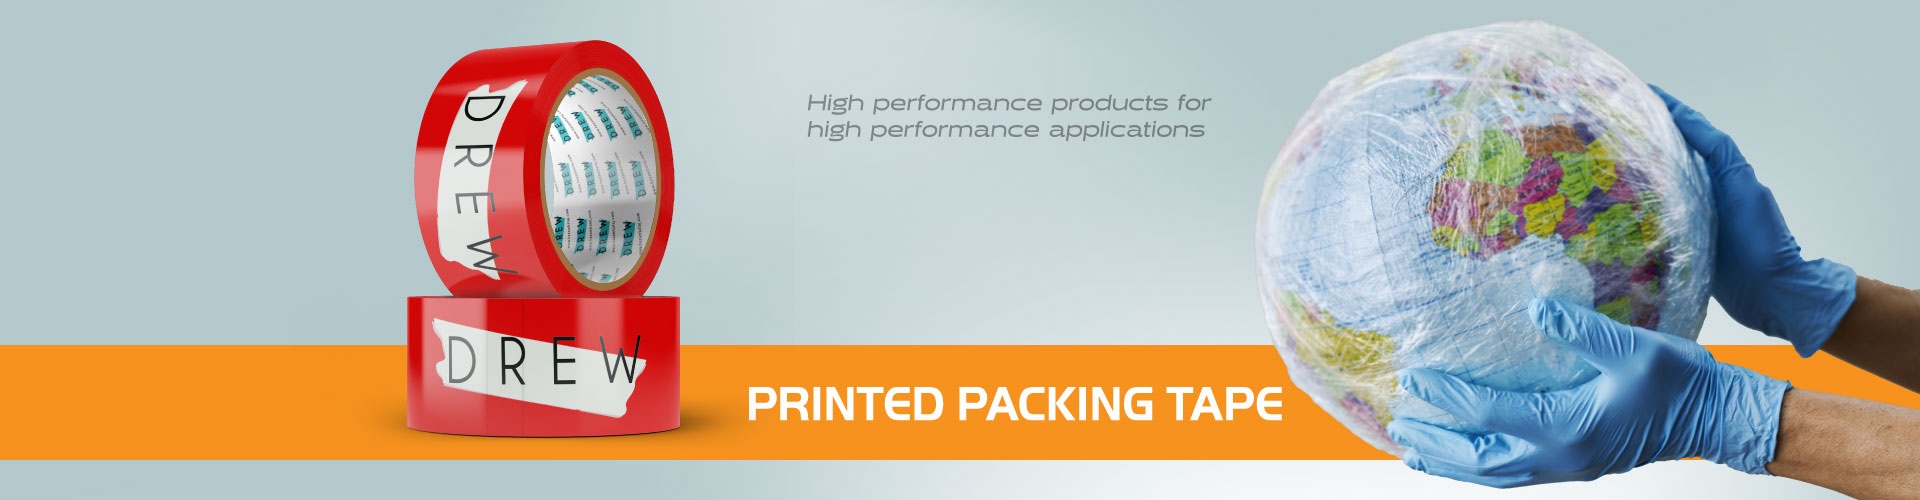 printed-packing-tape-slide-ENG